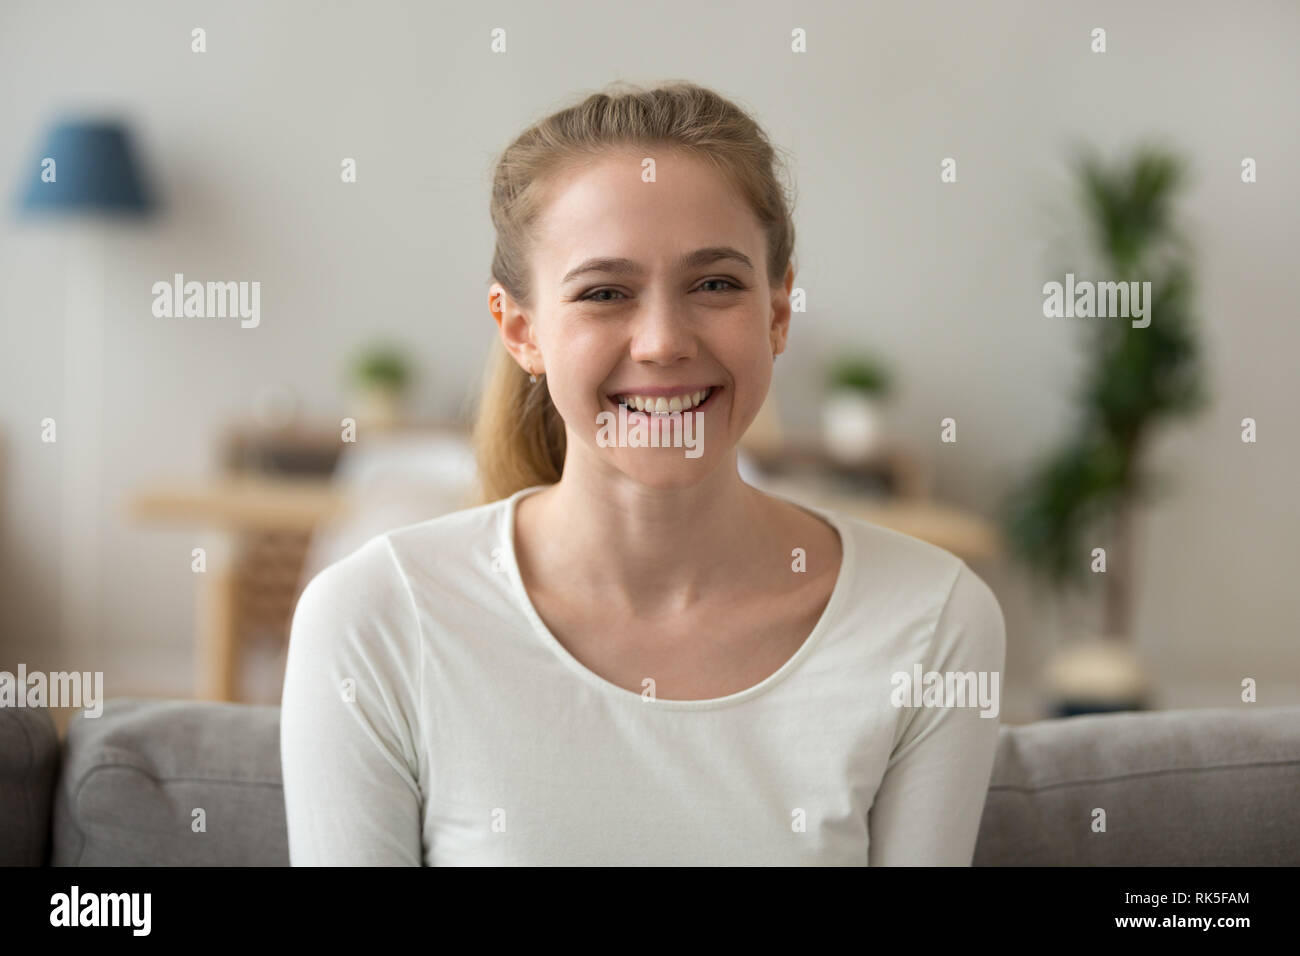 Happy friendly casual teen girl looking at camera, headshot portrait Stock Photo